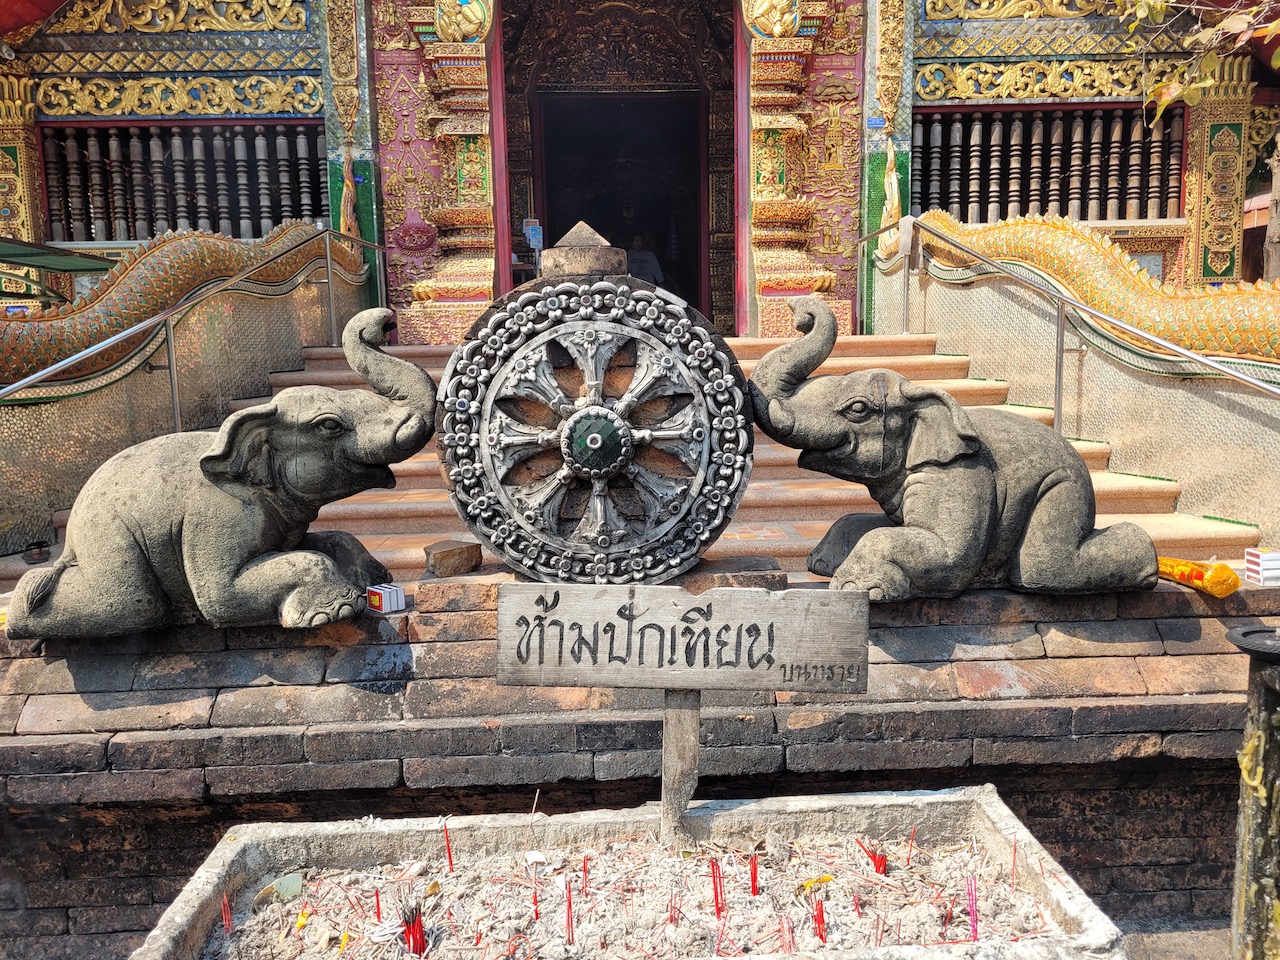 Wheel of life between elephants in Wat Chai Mongkhon Chiang Mai temple